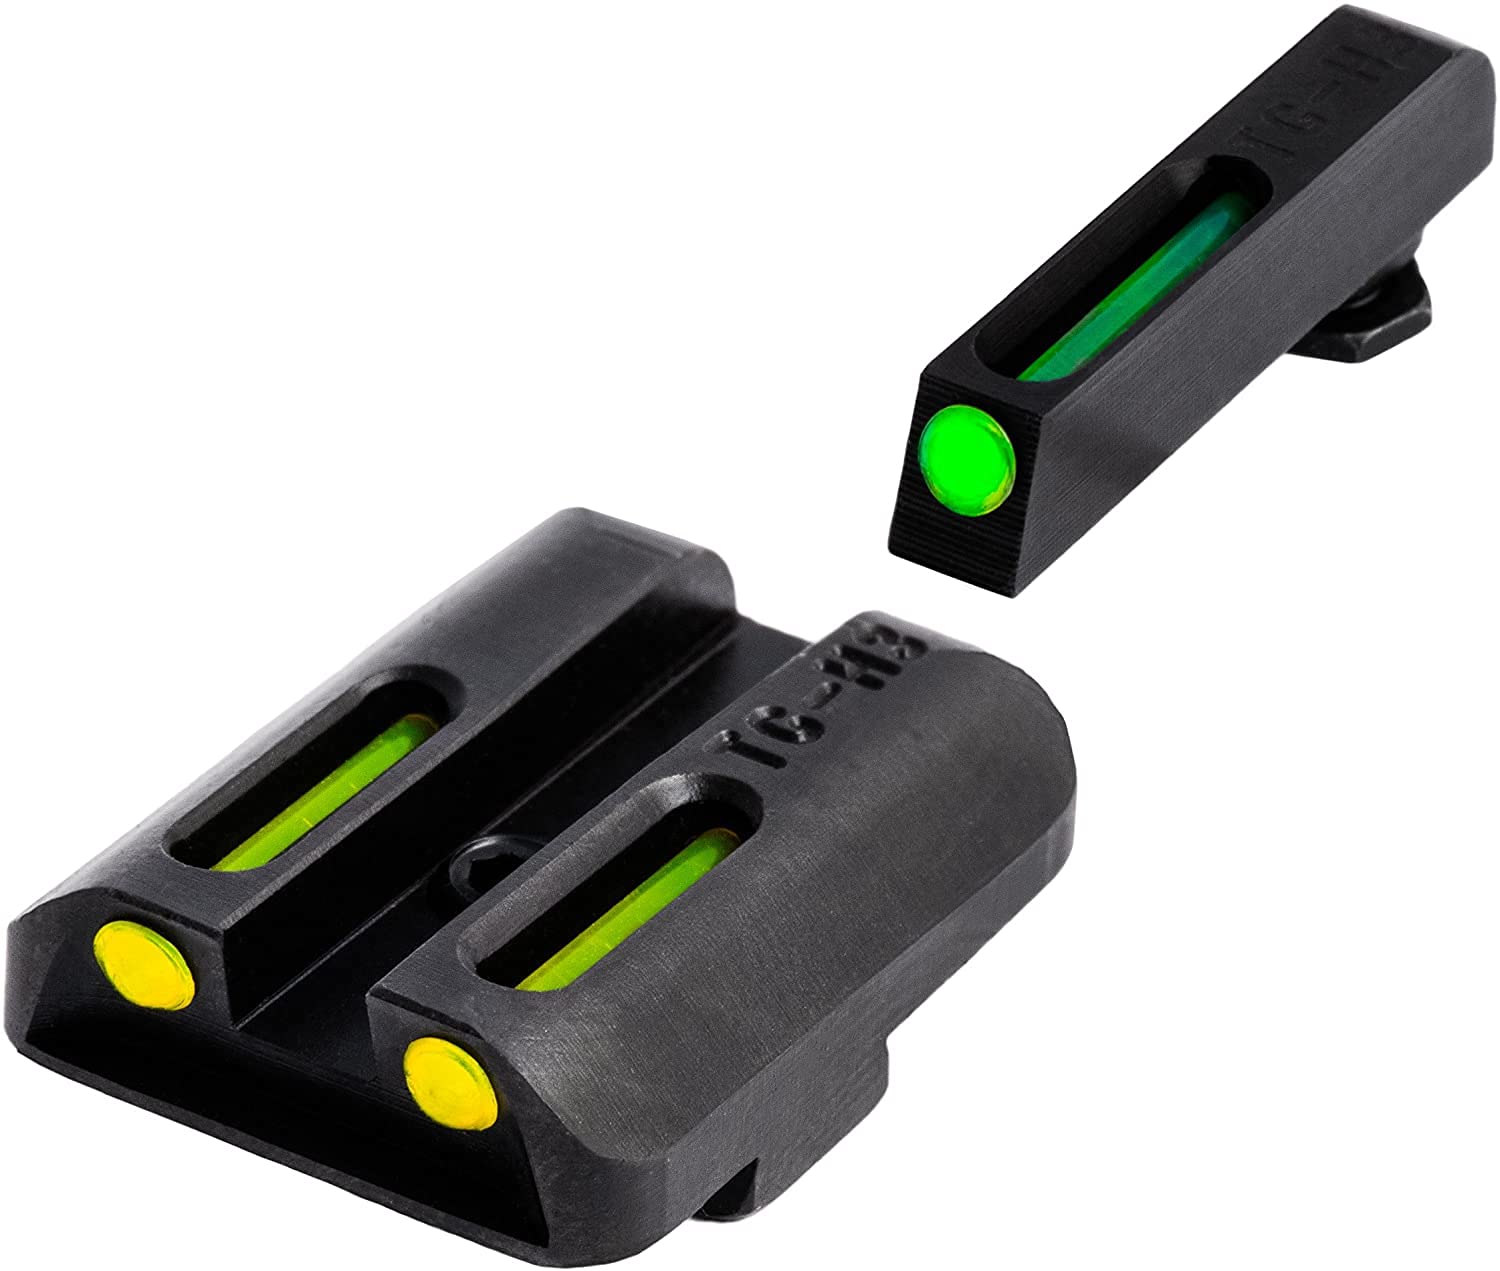 TruGlo TFO Tritium Fiber Optic Handgun Laser Sight Accessories Set with Rear Colors, Fits Glock 17/17L, 19, 22, 23, 24 Models and More, Yellow Light